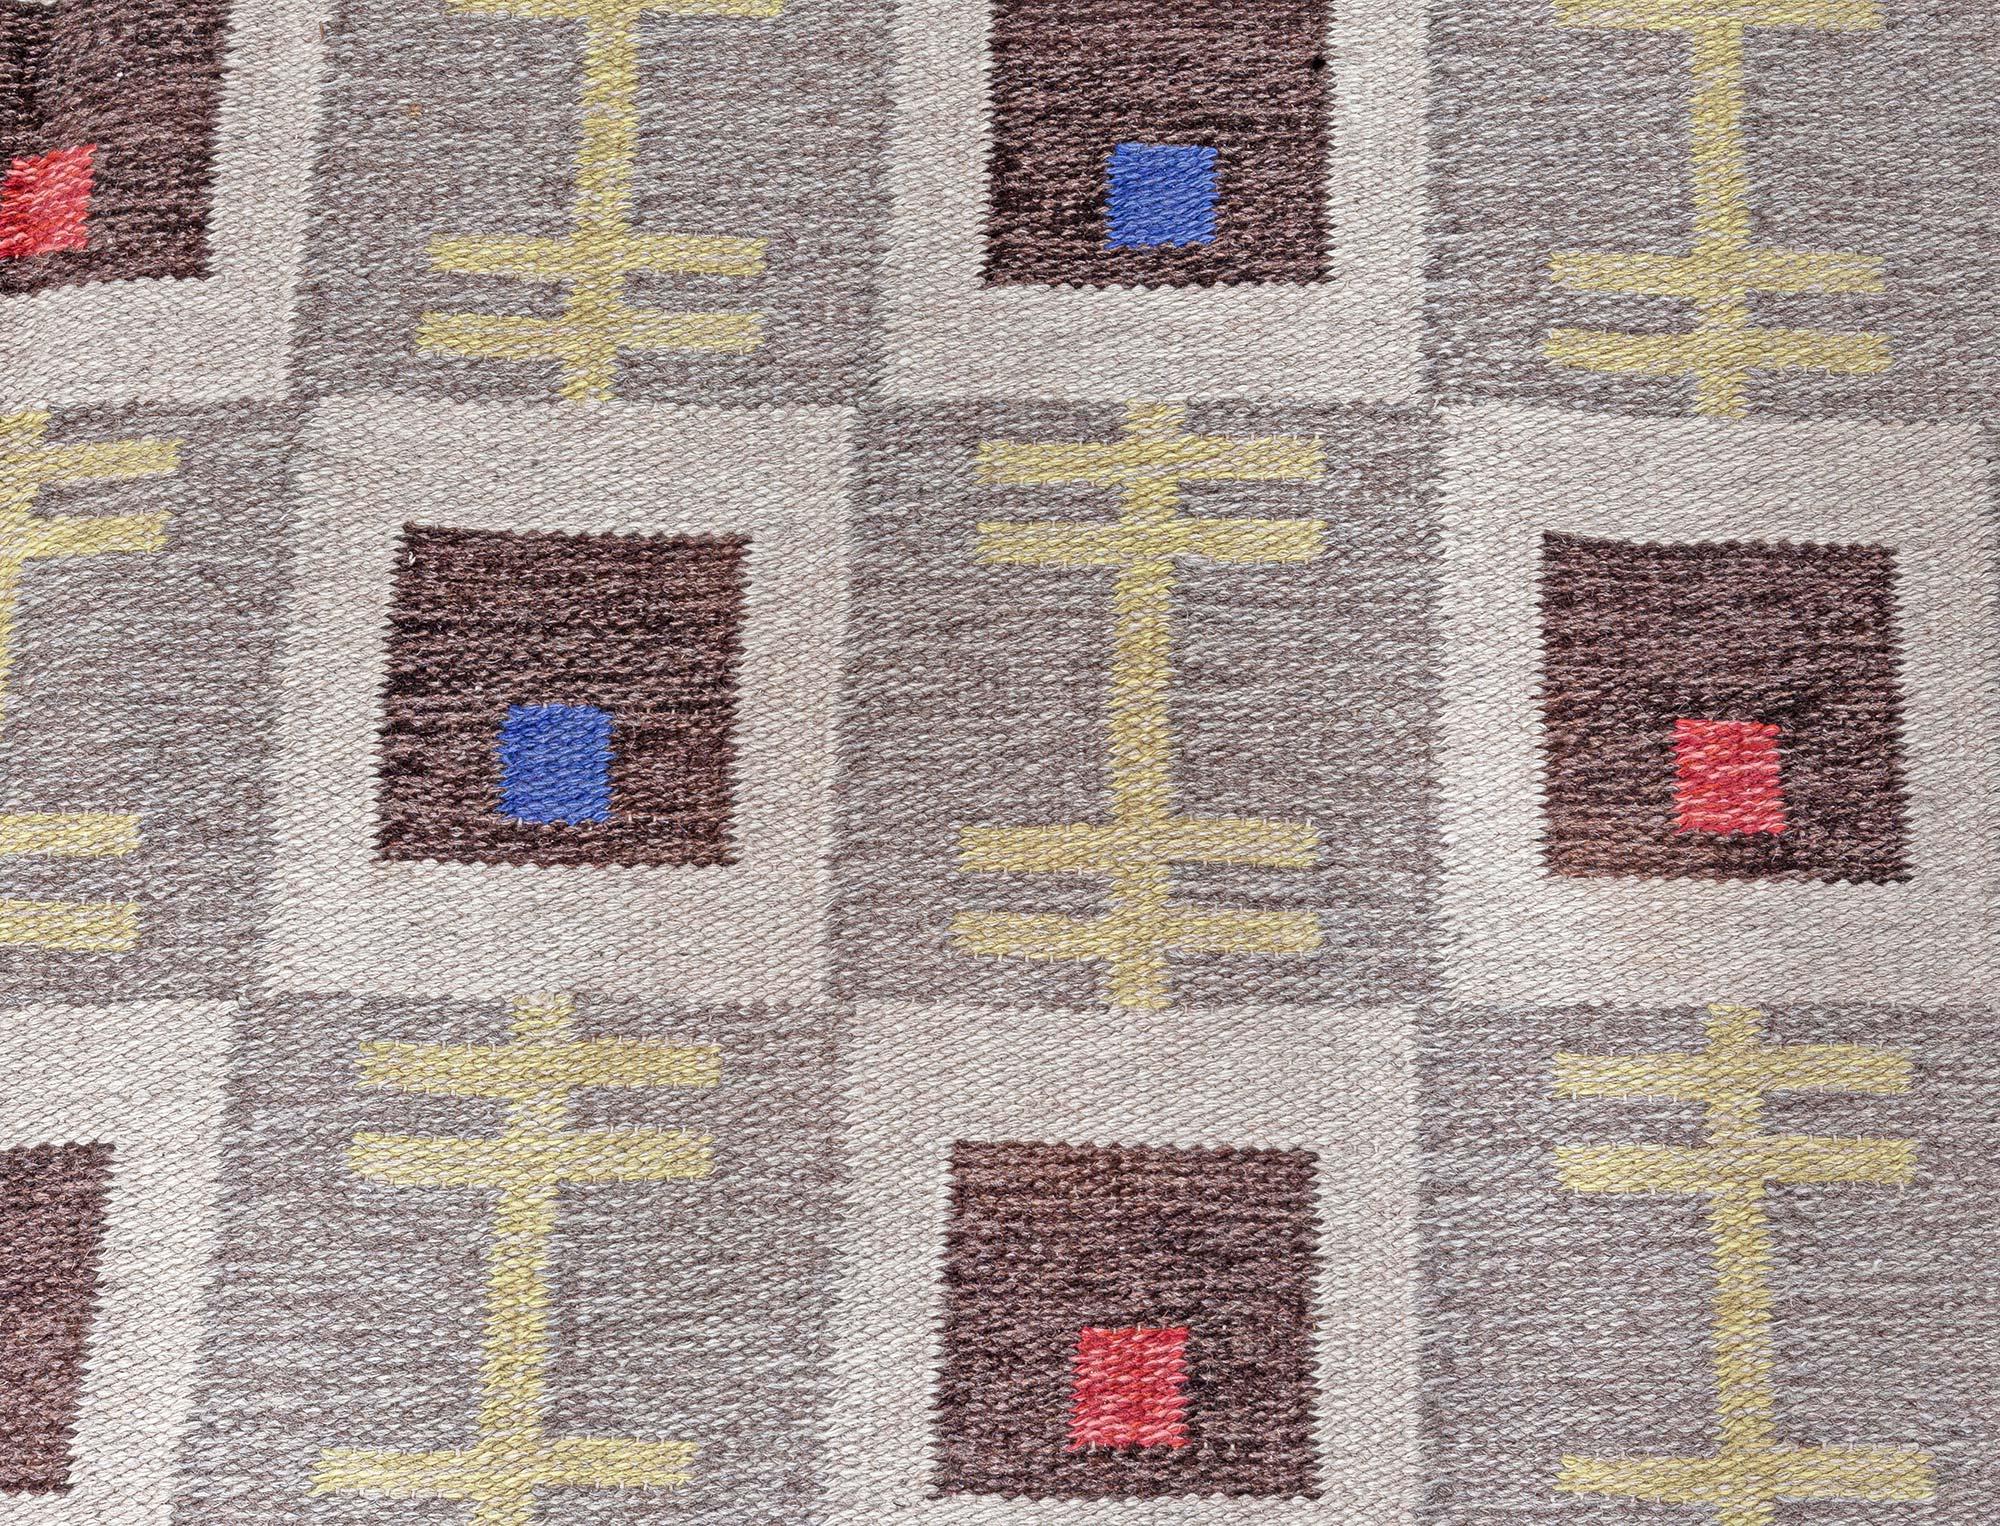 Vintage Swedish flat woven rug.
Size: 5'5